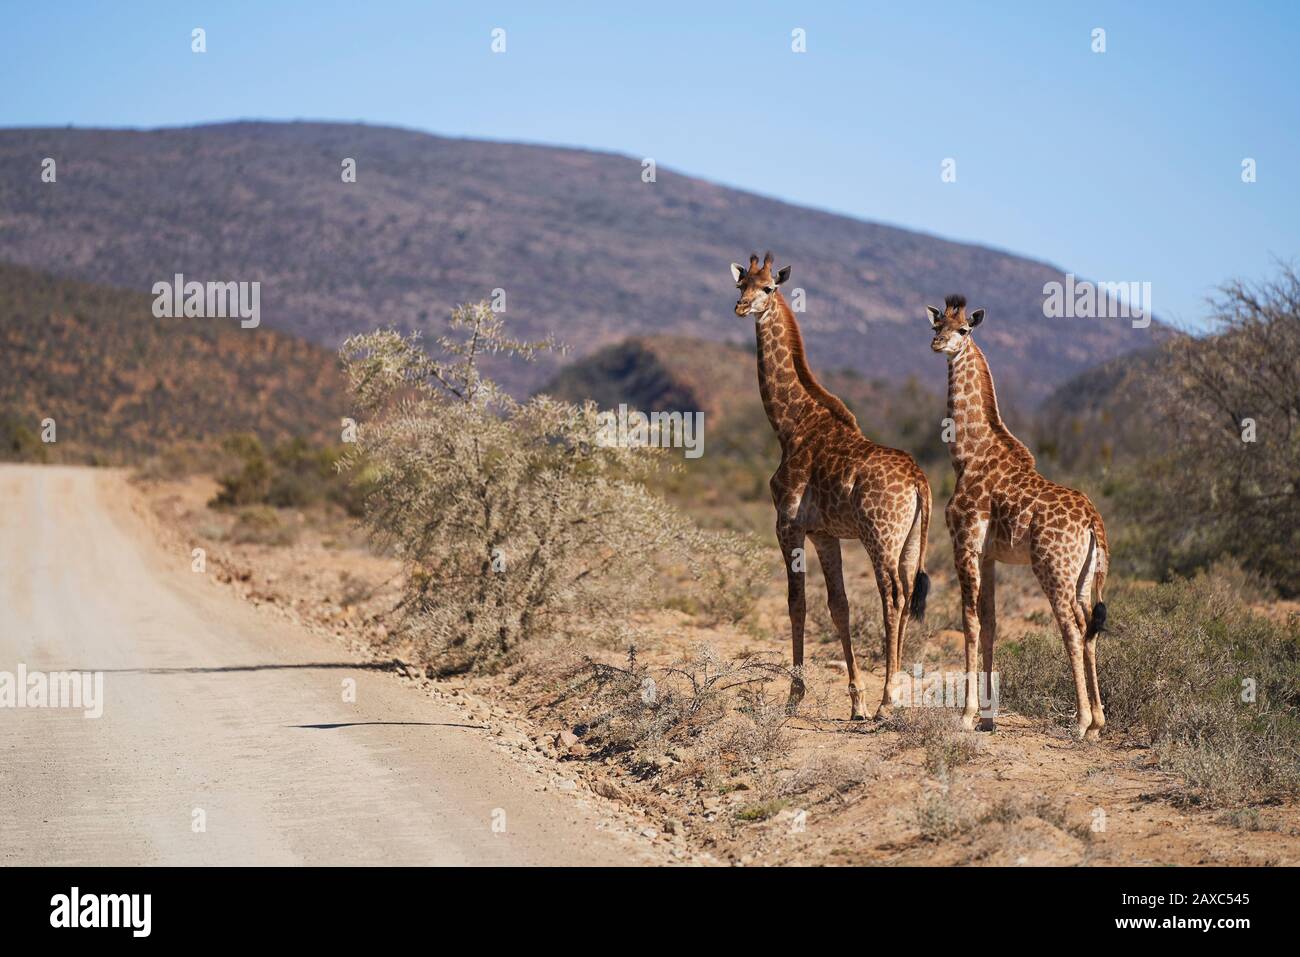 Giraffes en carretera soleada en reserva de vida silvestre Sudáfrica Foto de stock